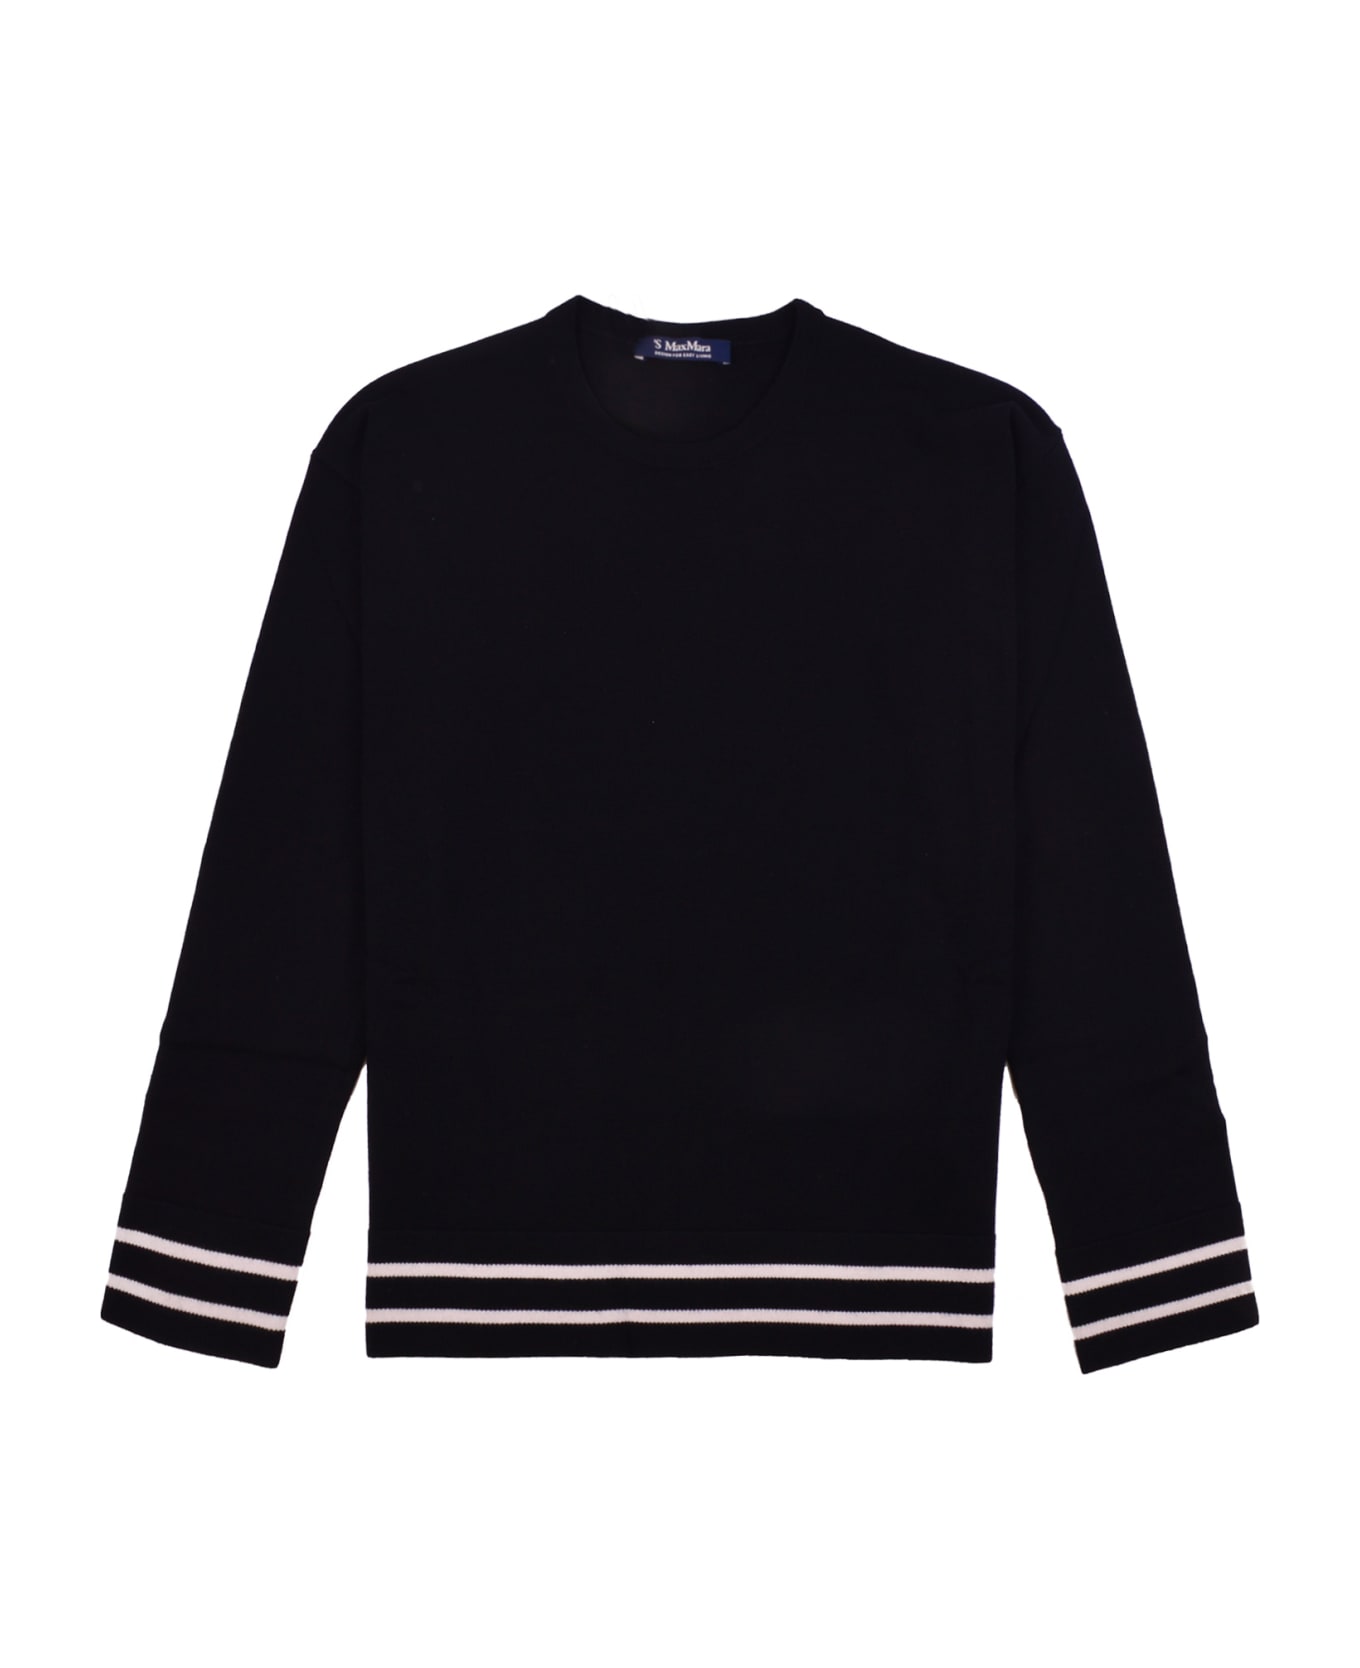 'S Max Mara West Sweater - Black